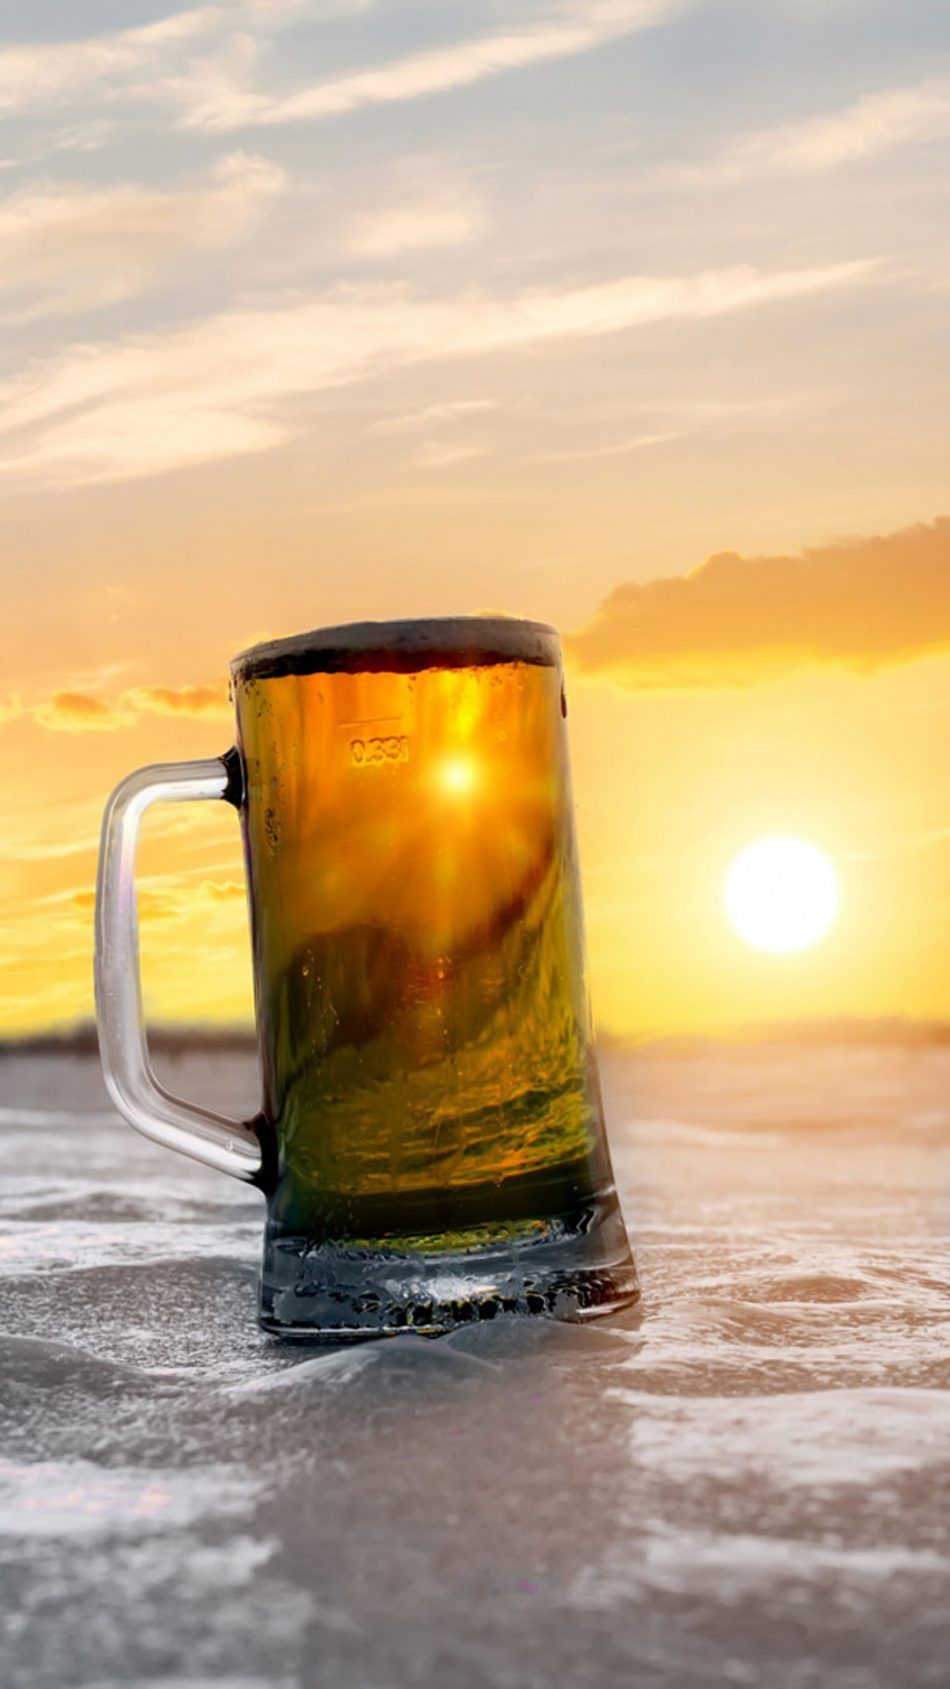  Bier Hintergrundbild 950x1689. Beer Mug Beach Sunset 4K Ultra HD Mobile Wallpaper. Beer wallpaper, Summer beer, Beer photography